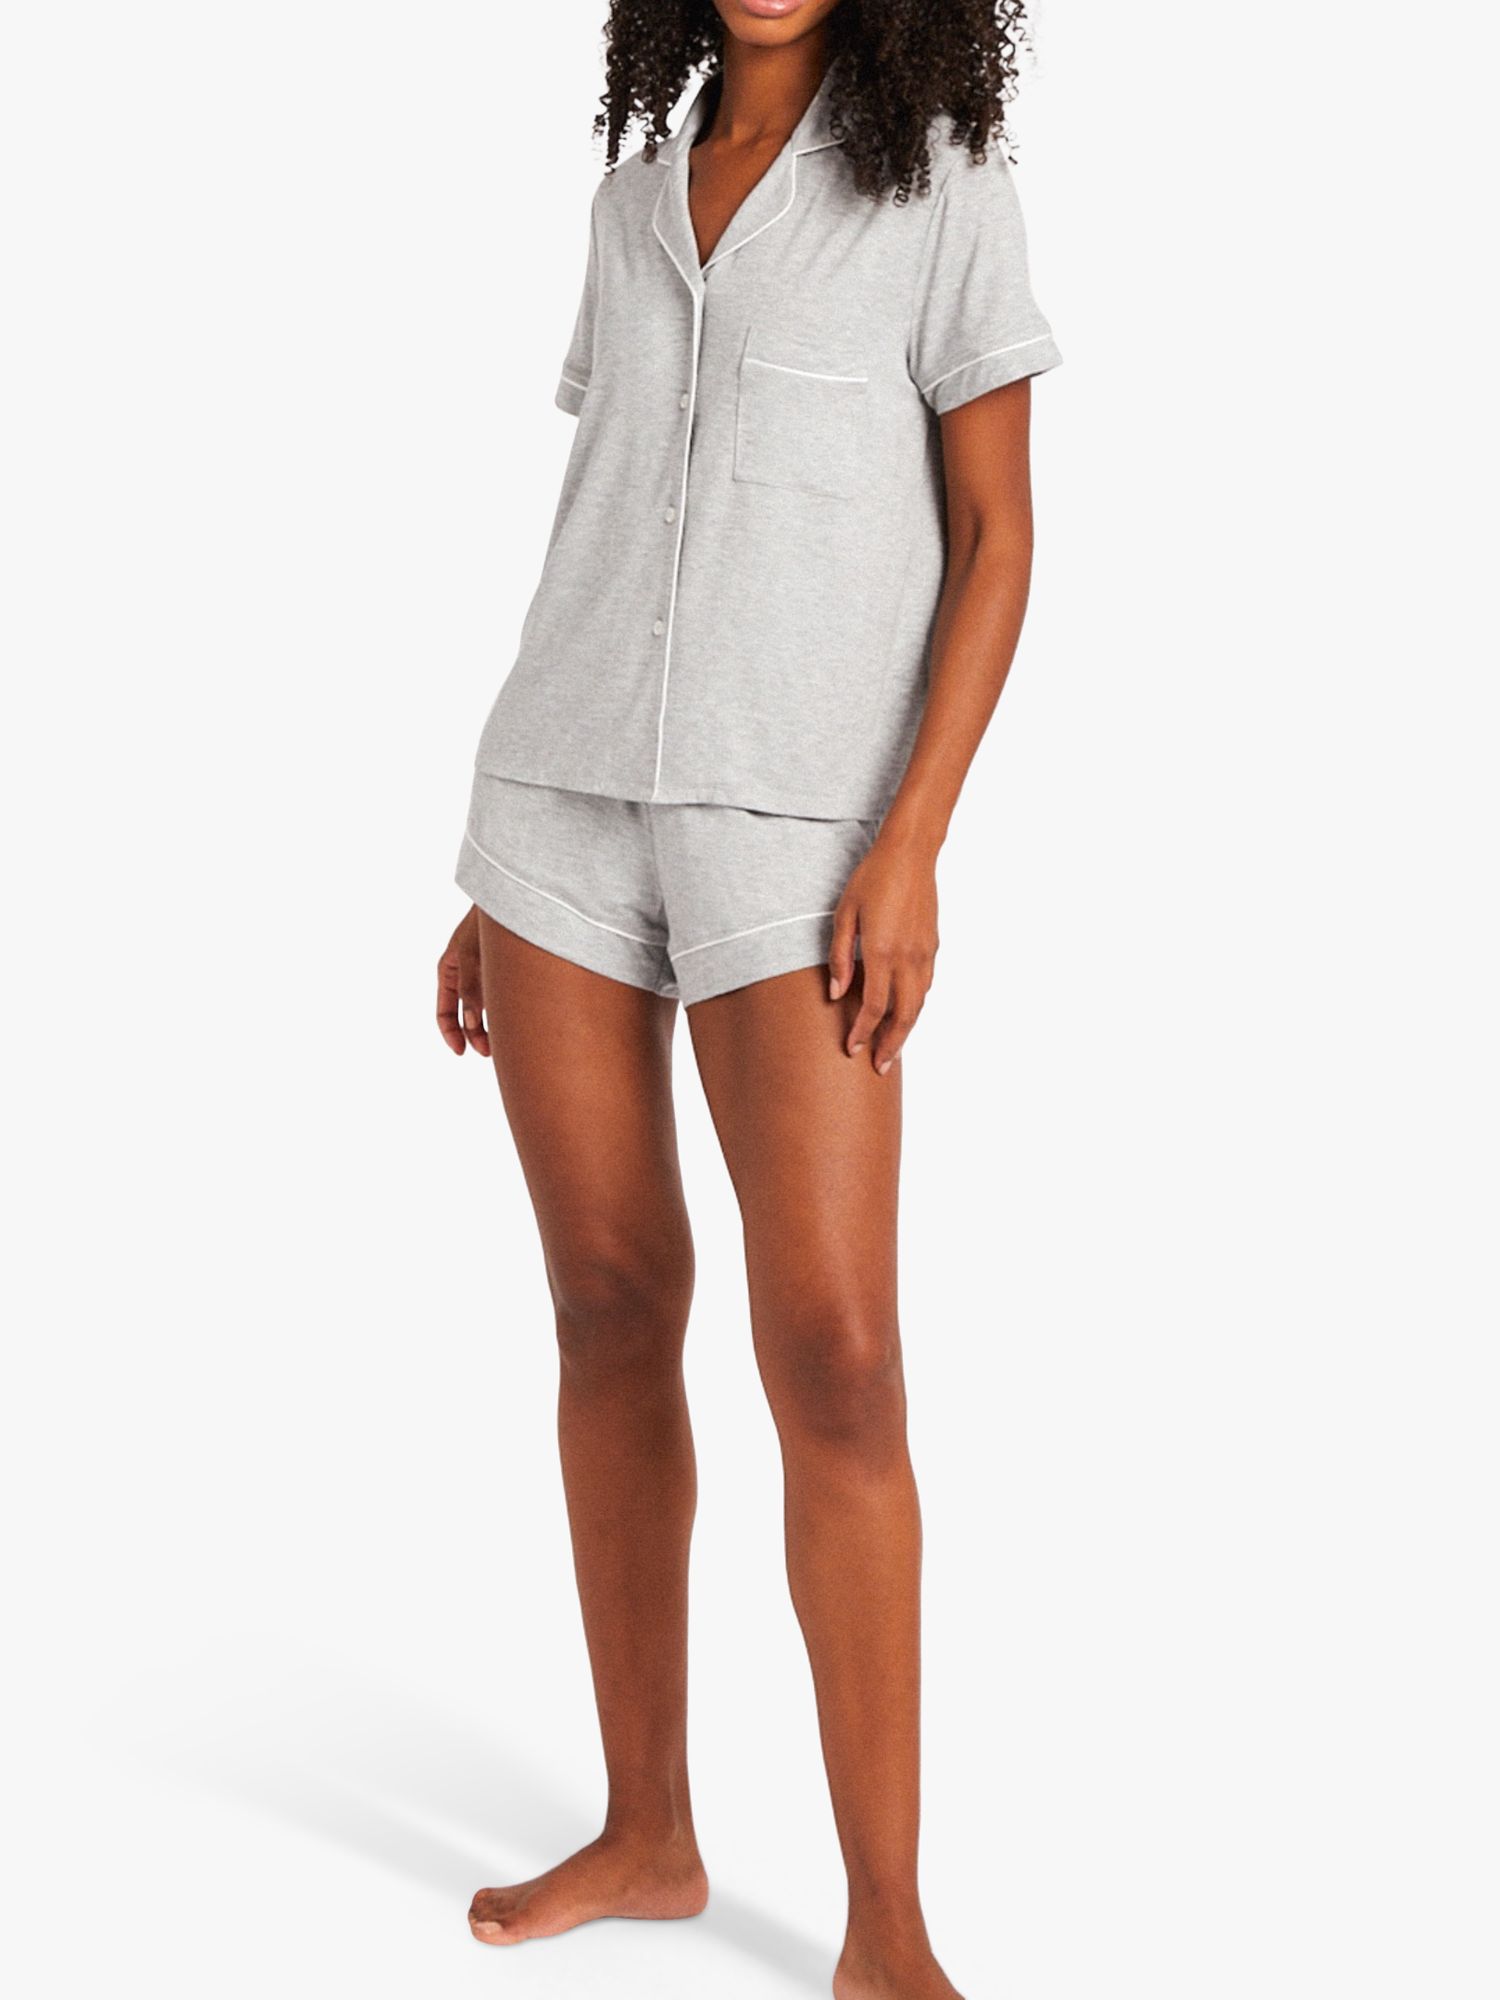 Buy Chelsea Peers Modal Piped Shorts Pyjama Set Online at johnlewis.com